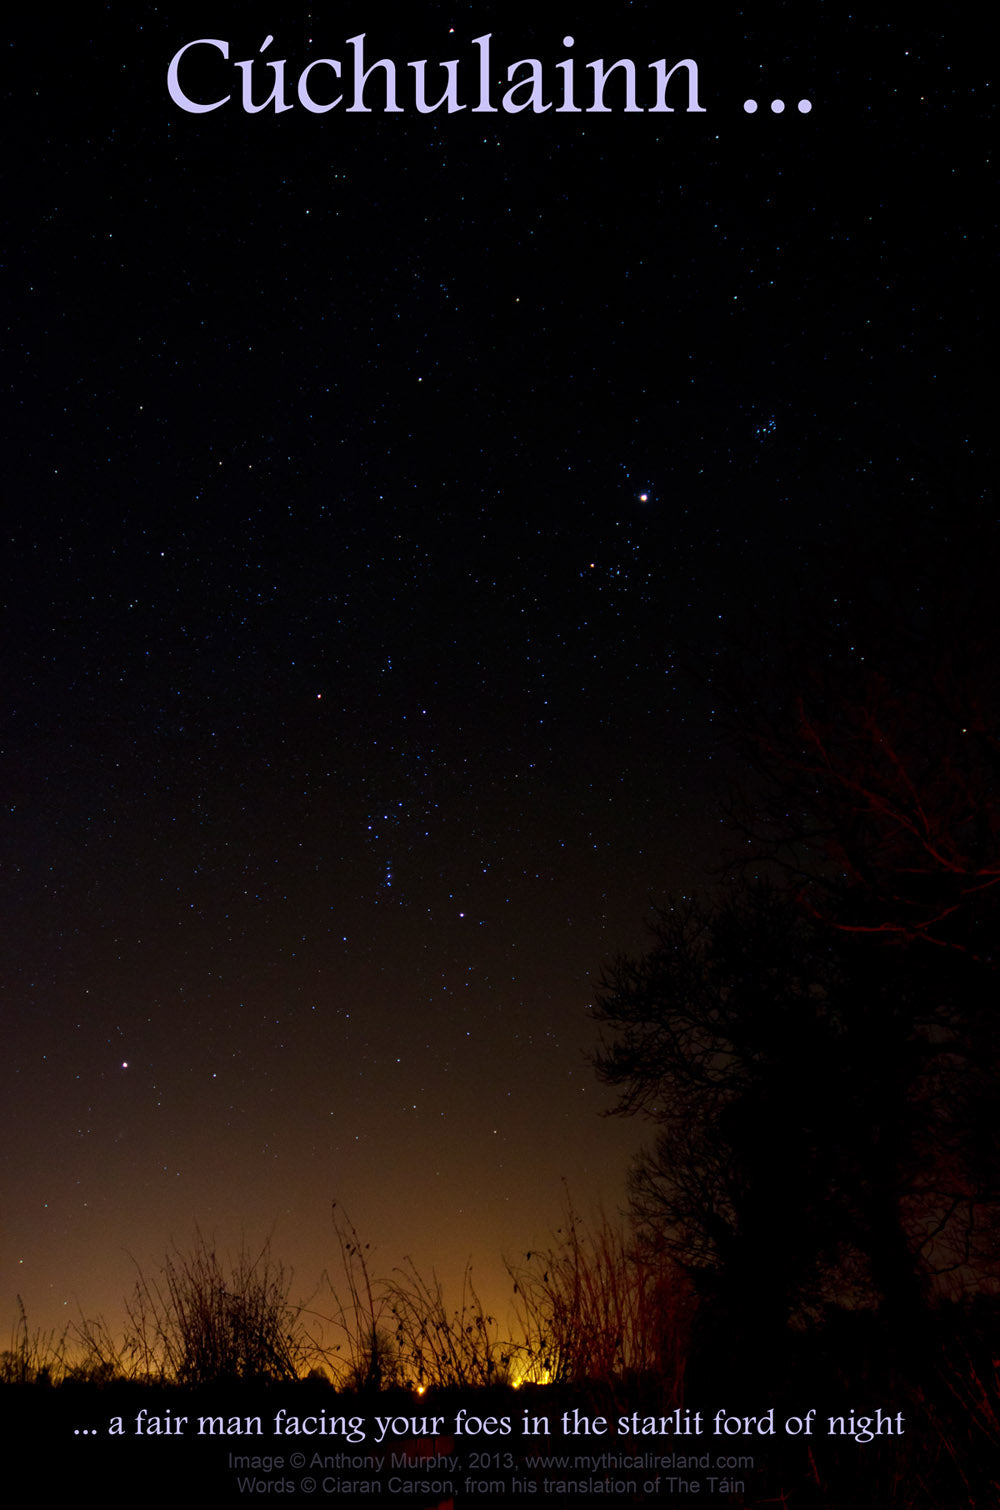 Cúchulainn guards the starlit ford of night